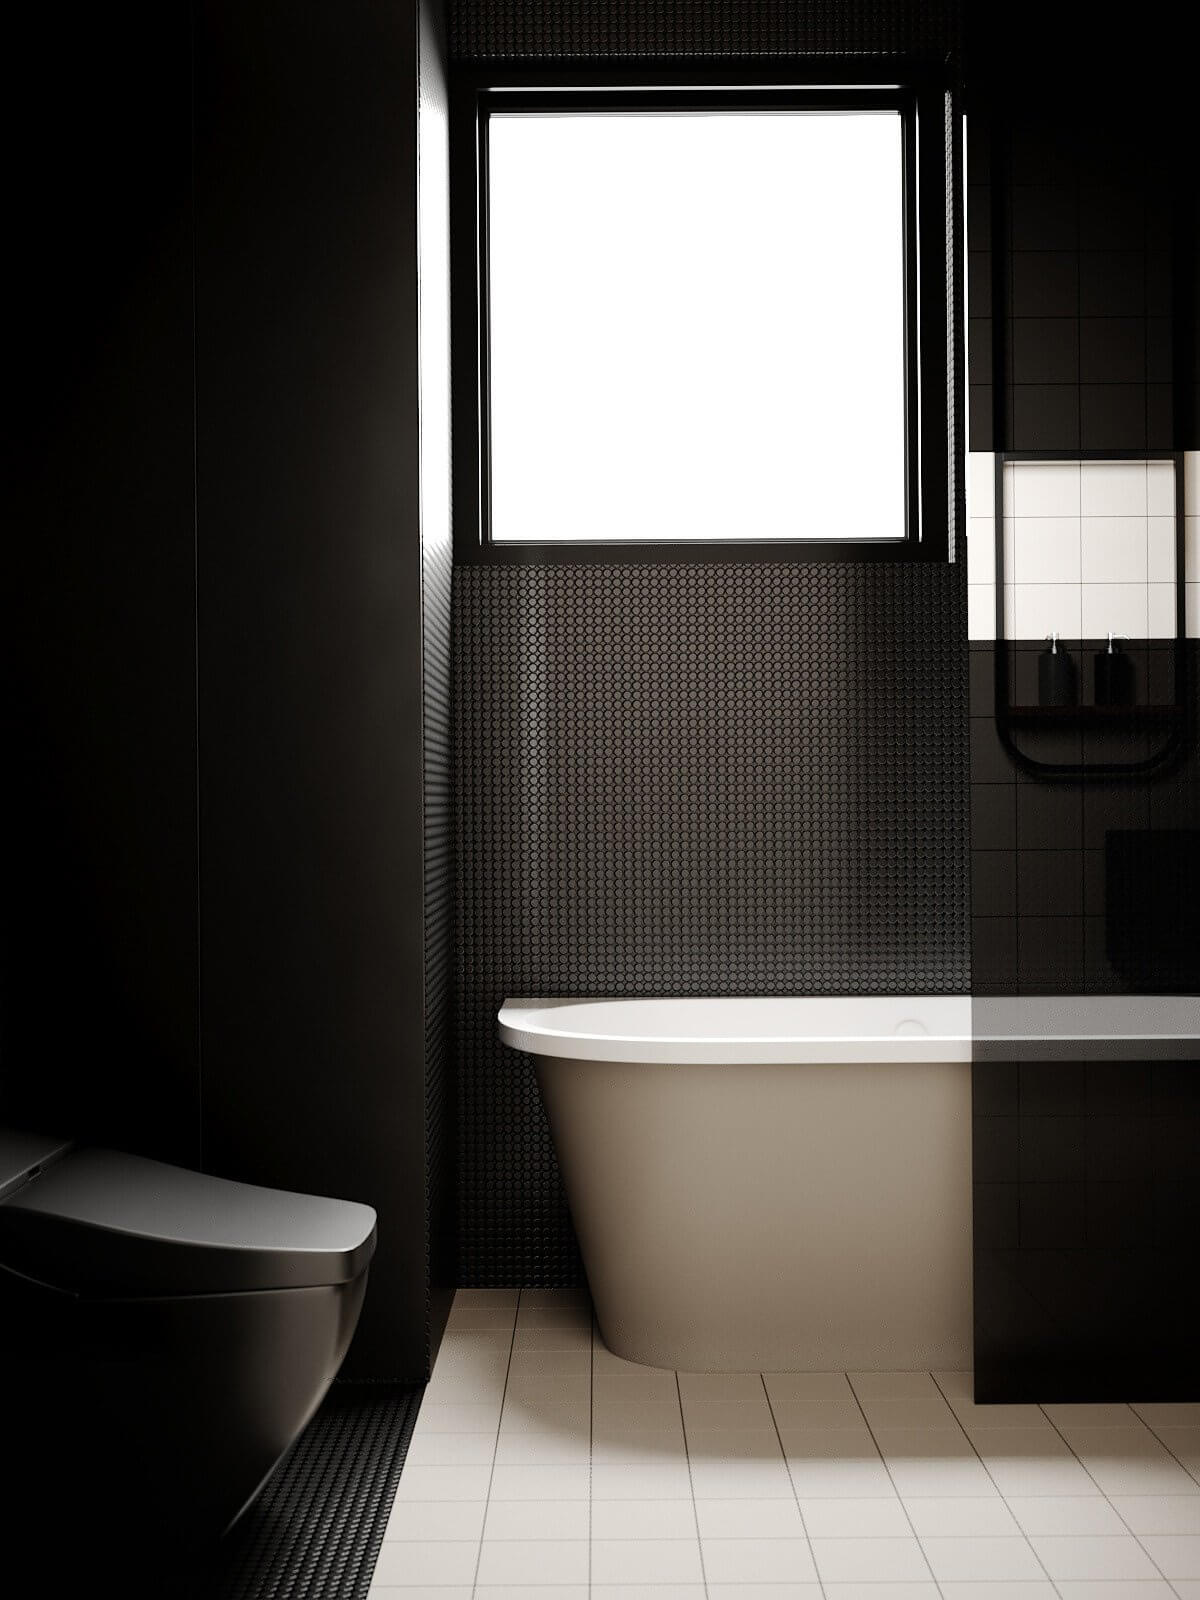 Secret circle apartment bathroom bathtub - cgi visualization